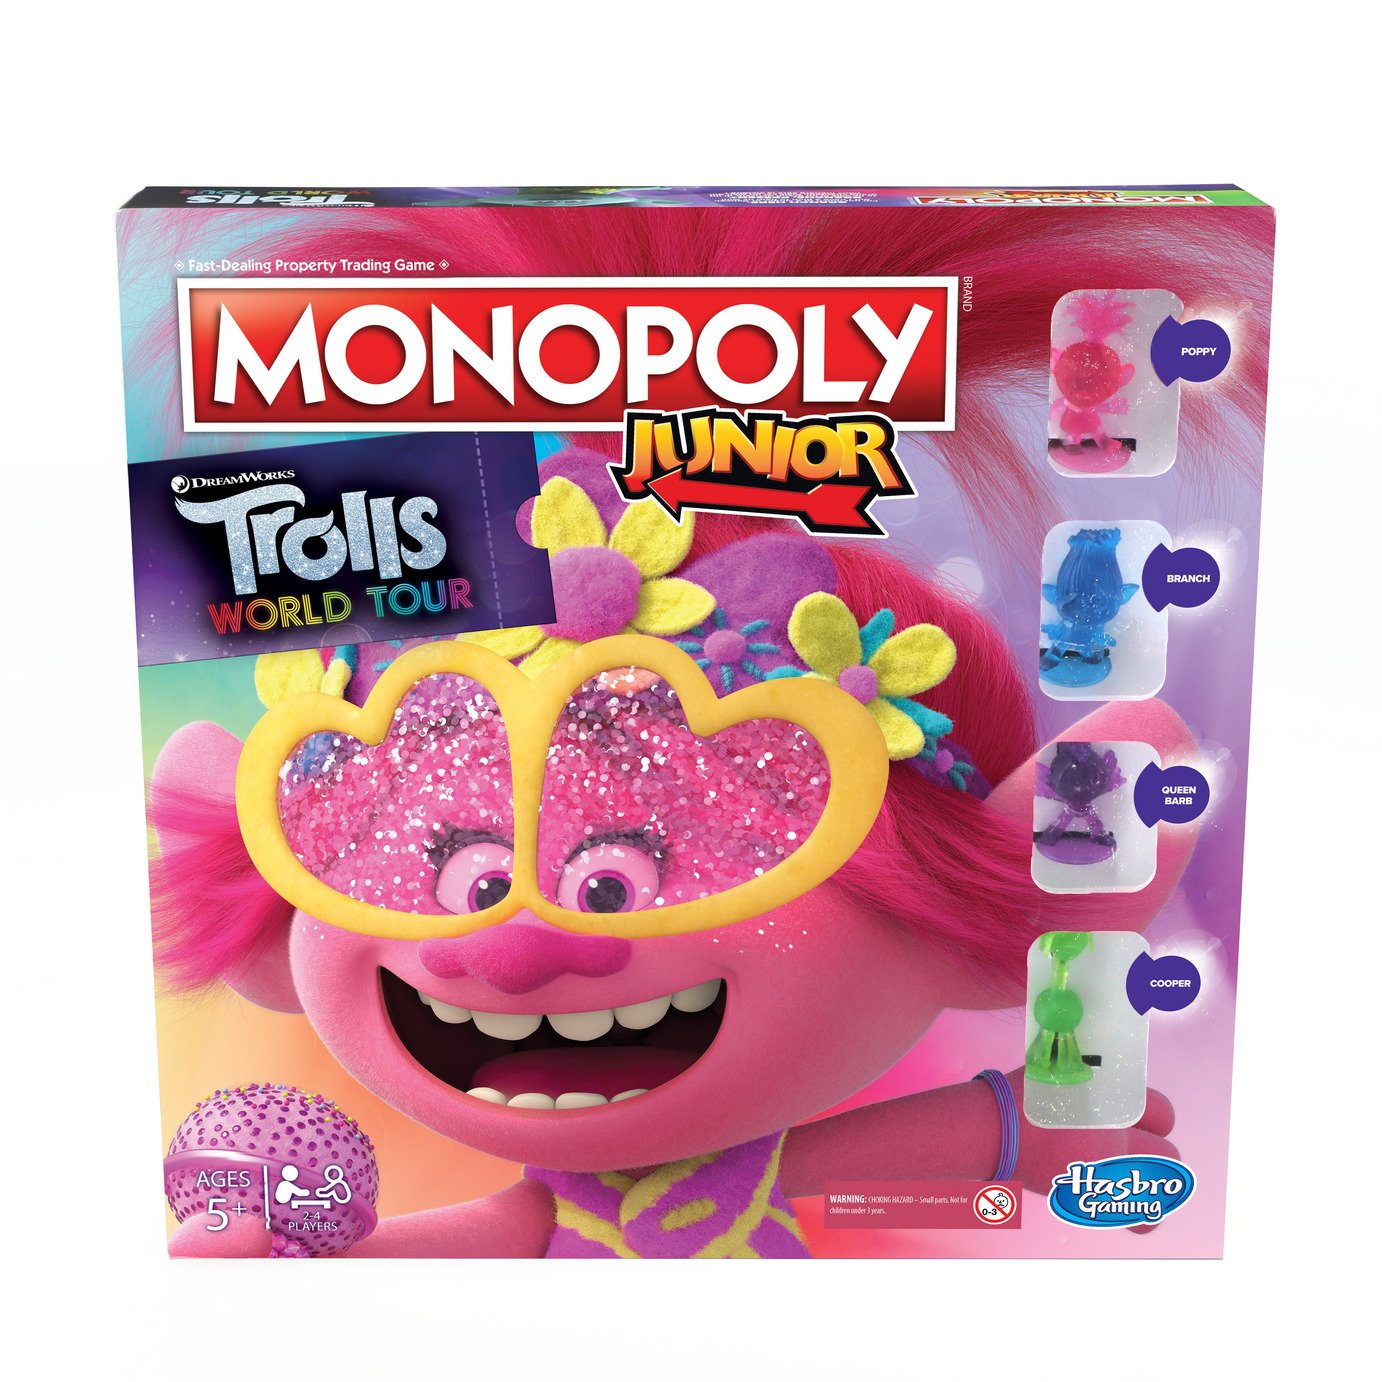 Monopoly Junior: DreamWorks Trolls World Tour Edition Review